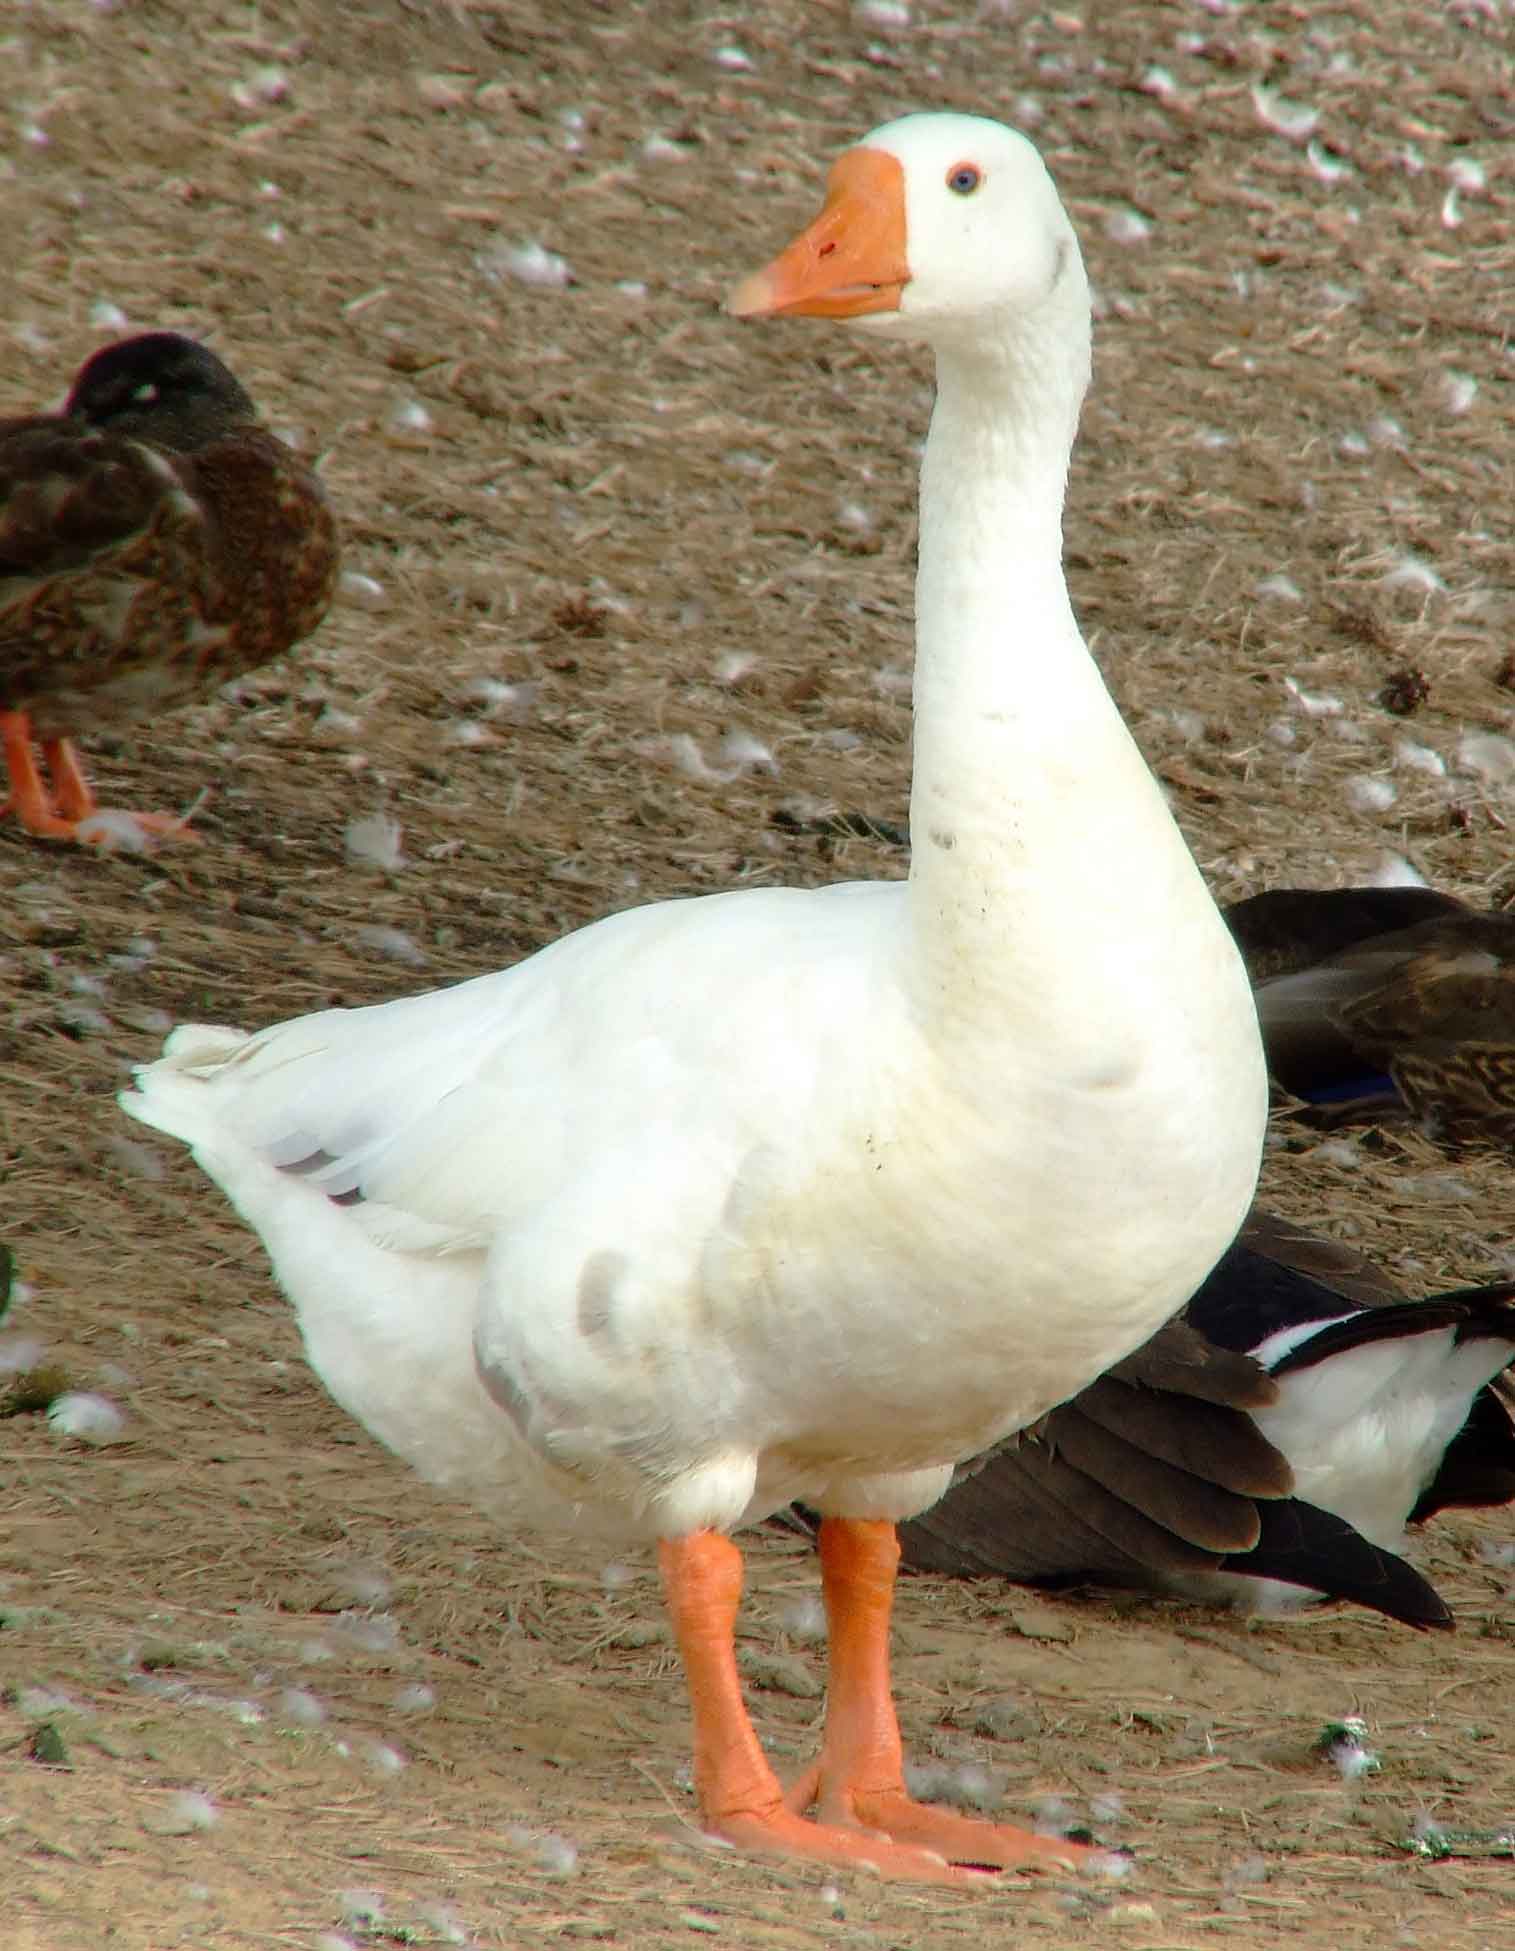 canada goose facts wikipedia, Canada Goose kensington parka sale authentic